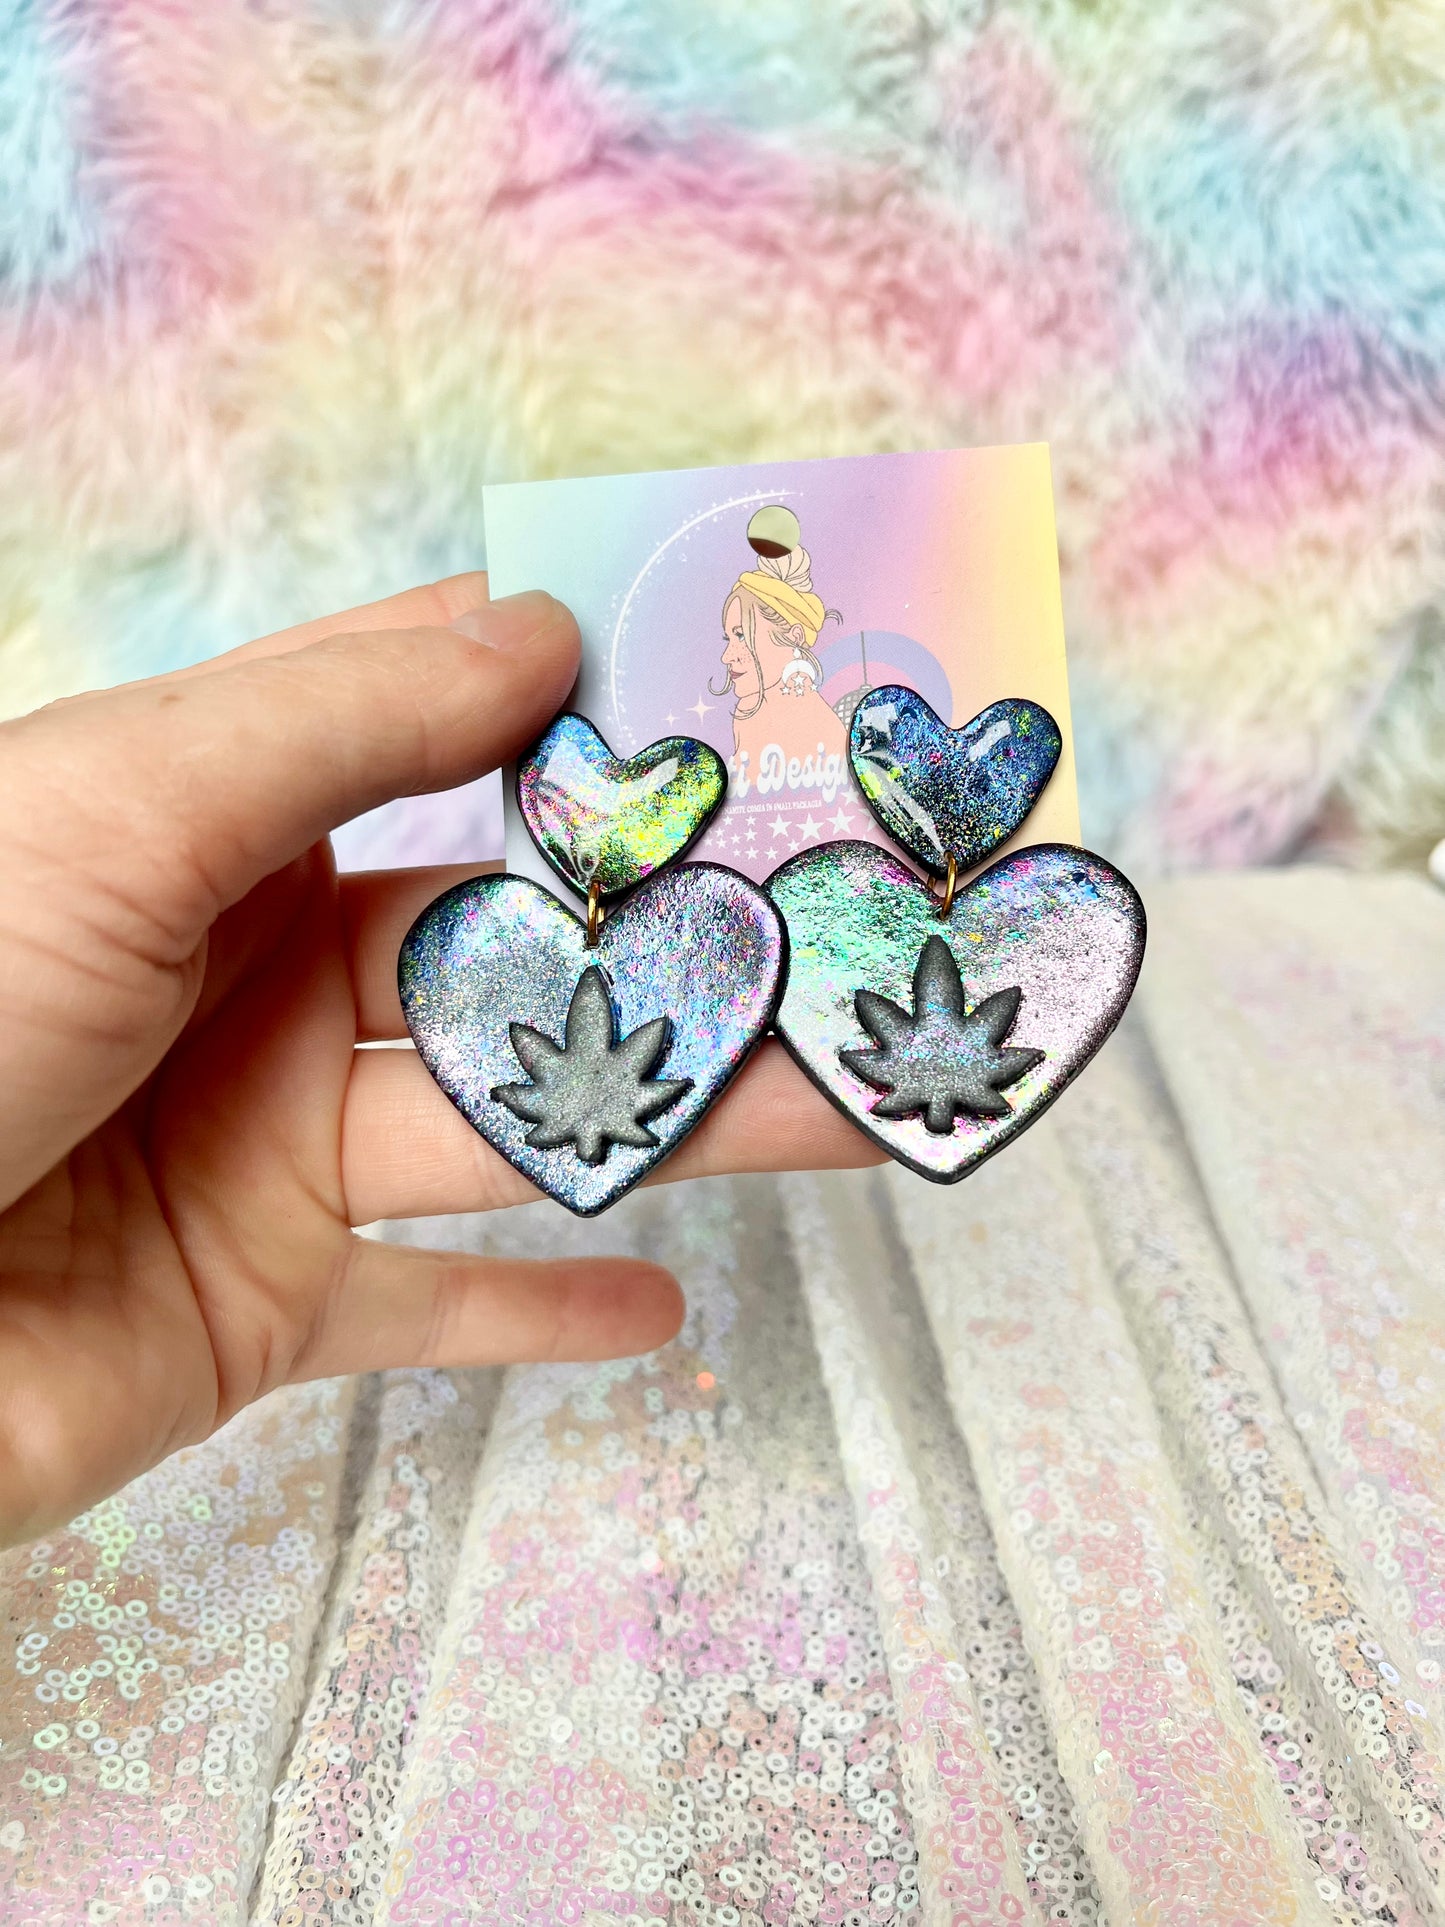 Heart earrings with leaves